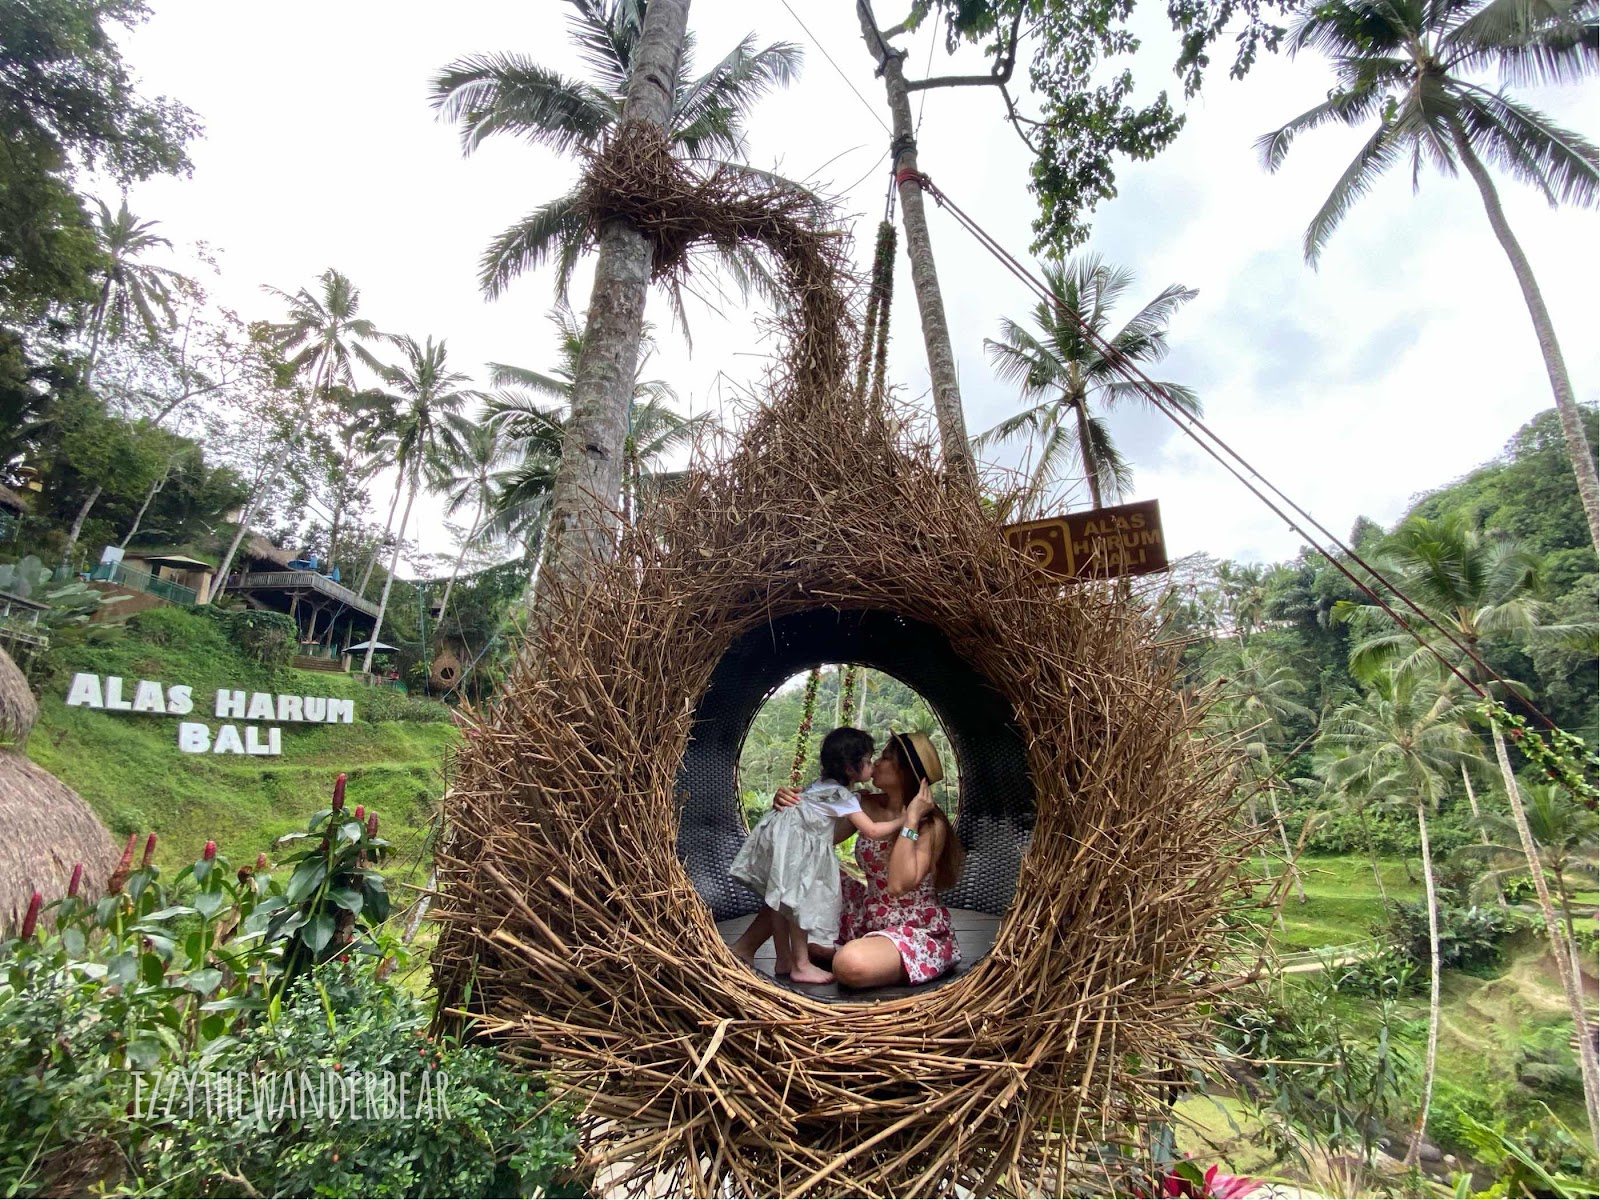 Giant Bird’s Nest Photo Booth at Alas Harum